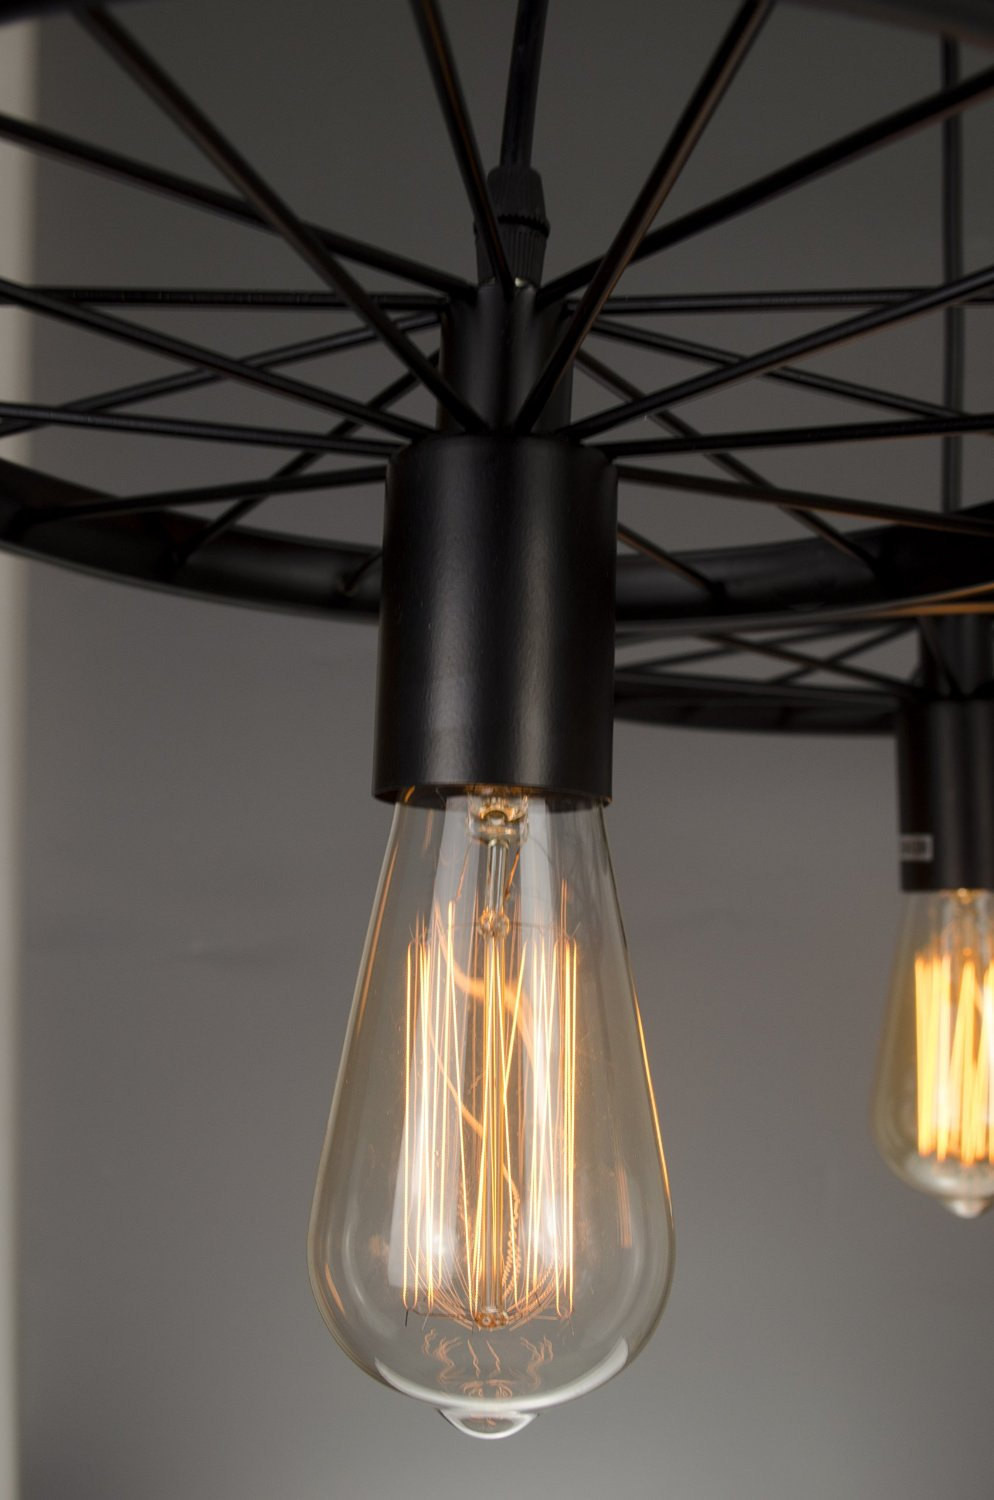 Edison Kitchen Lighting
 Industrial style pendant light 3 edison bulbs chandelier